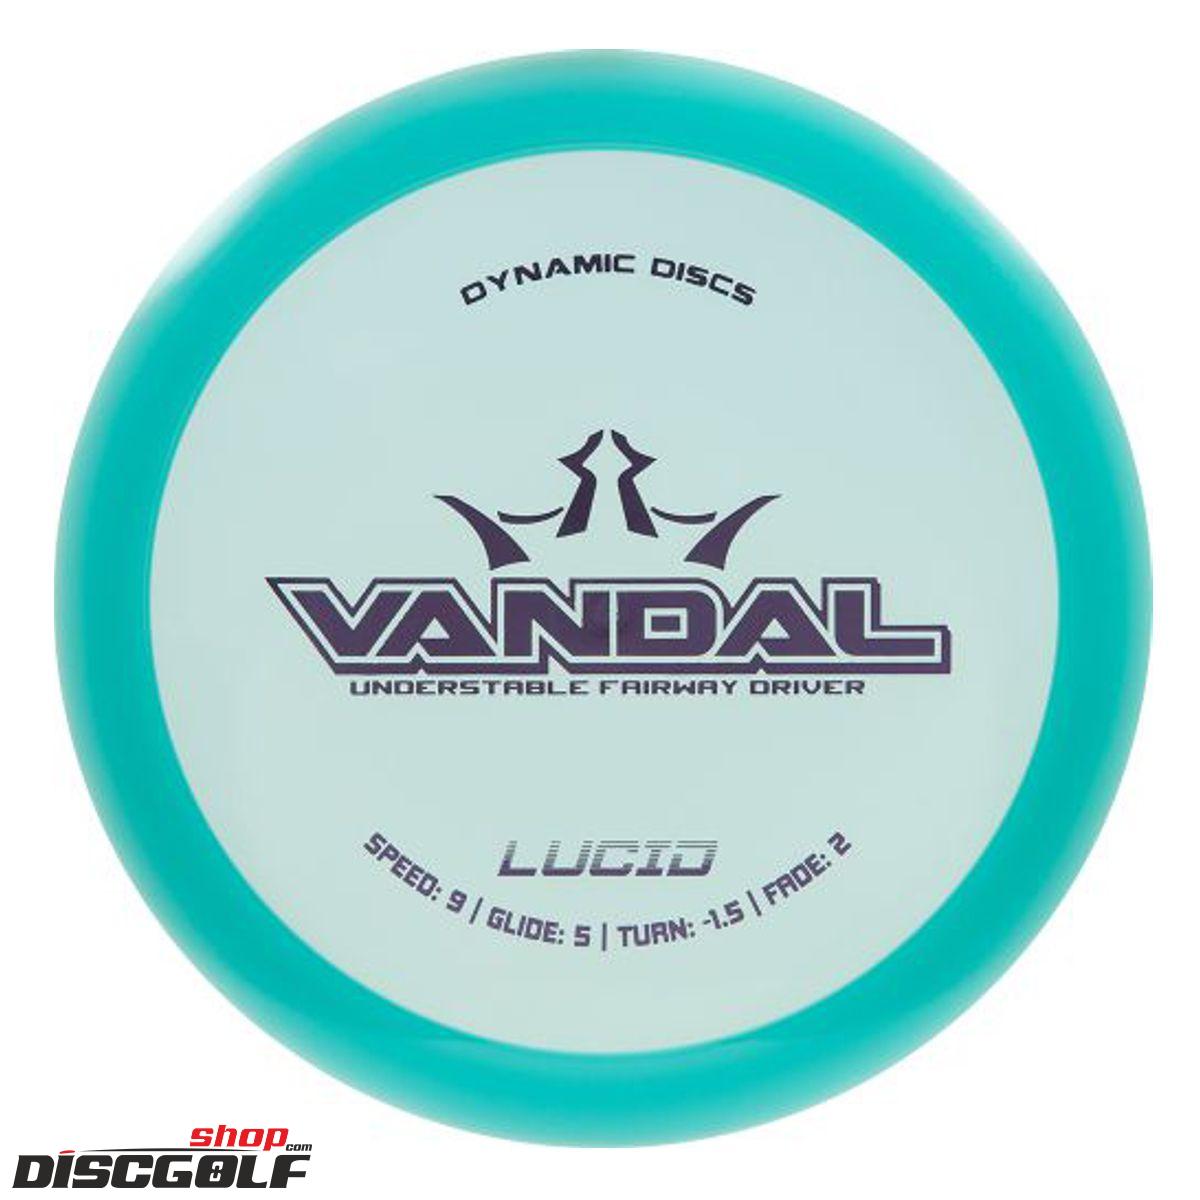 Dynamic Discs Vandal Lucid